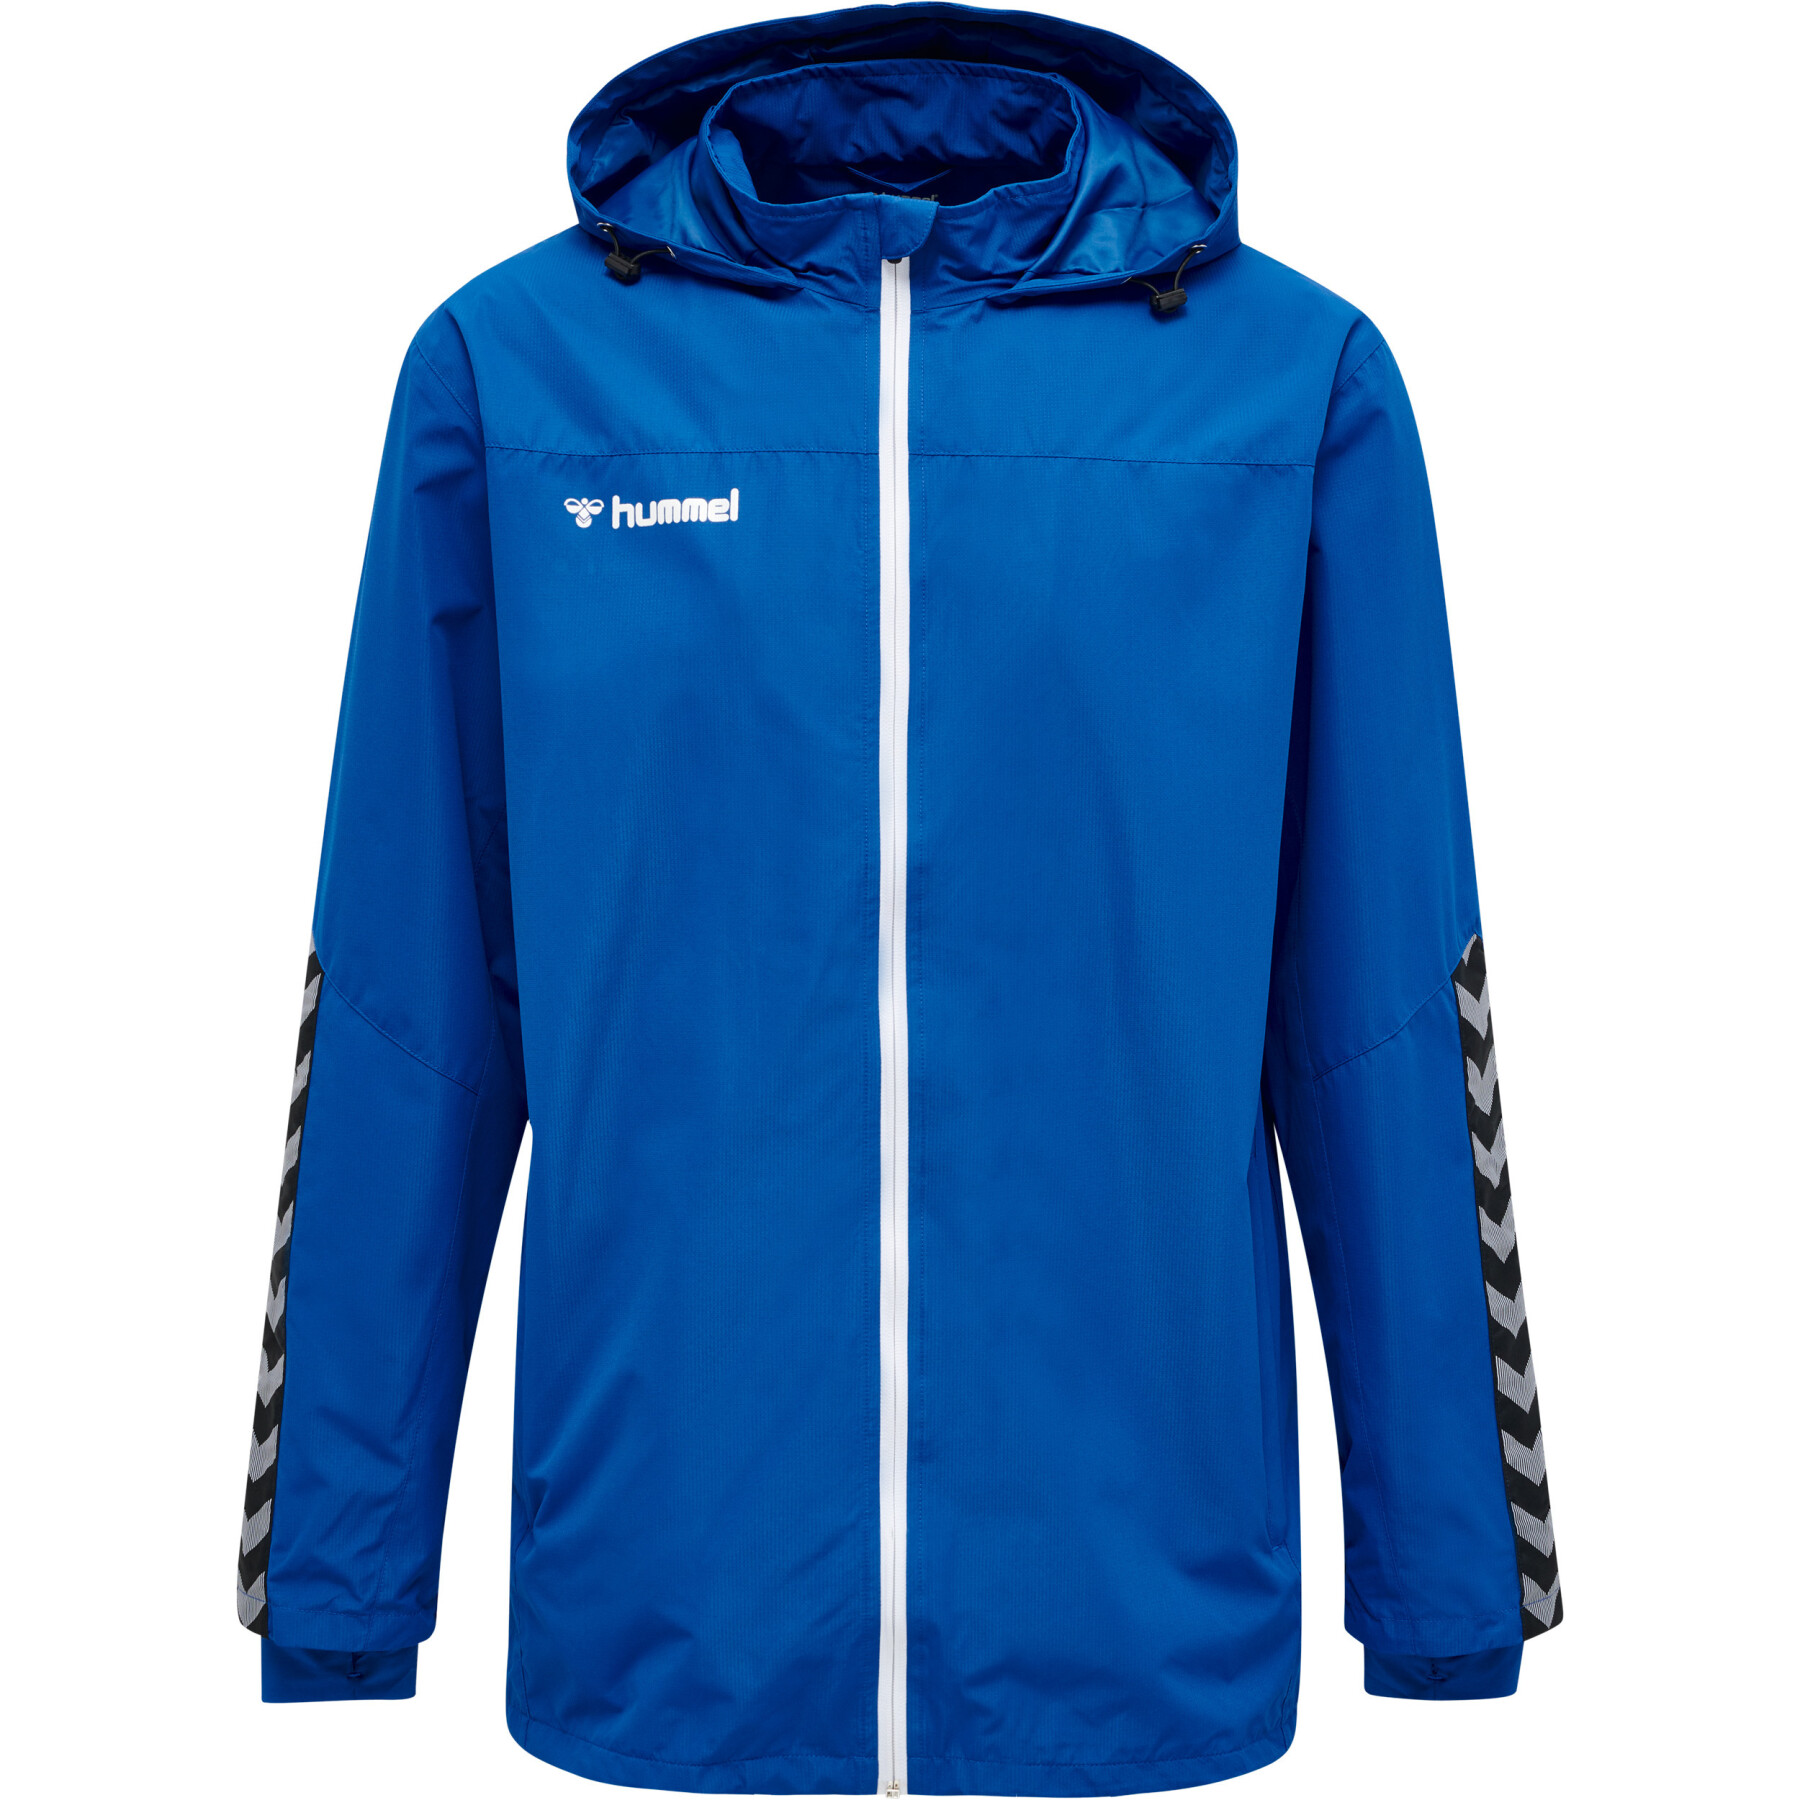 Handball All-Weather wear Jacket - - Hummel - Authenctic Hummel Brands